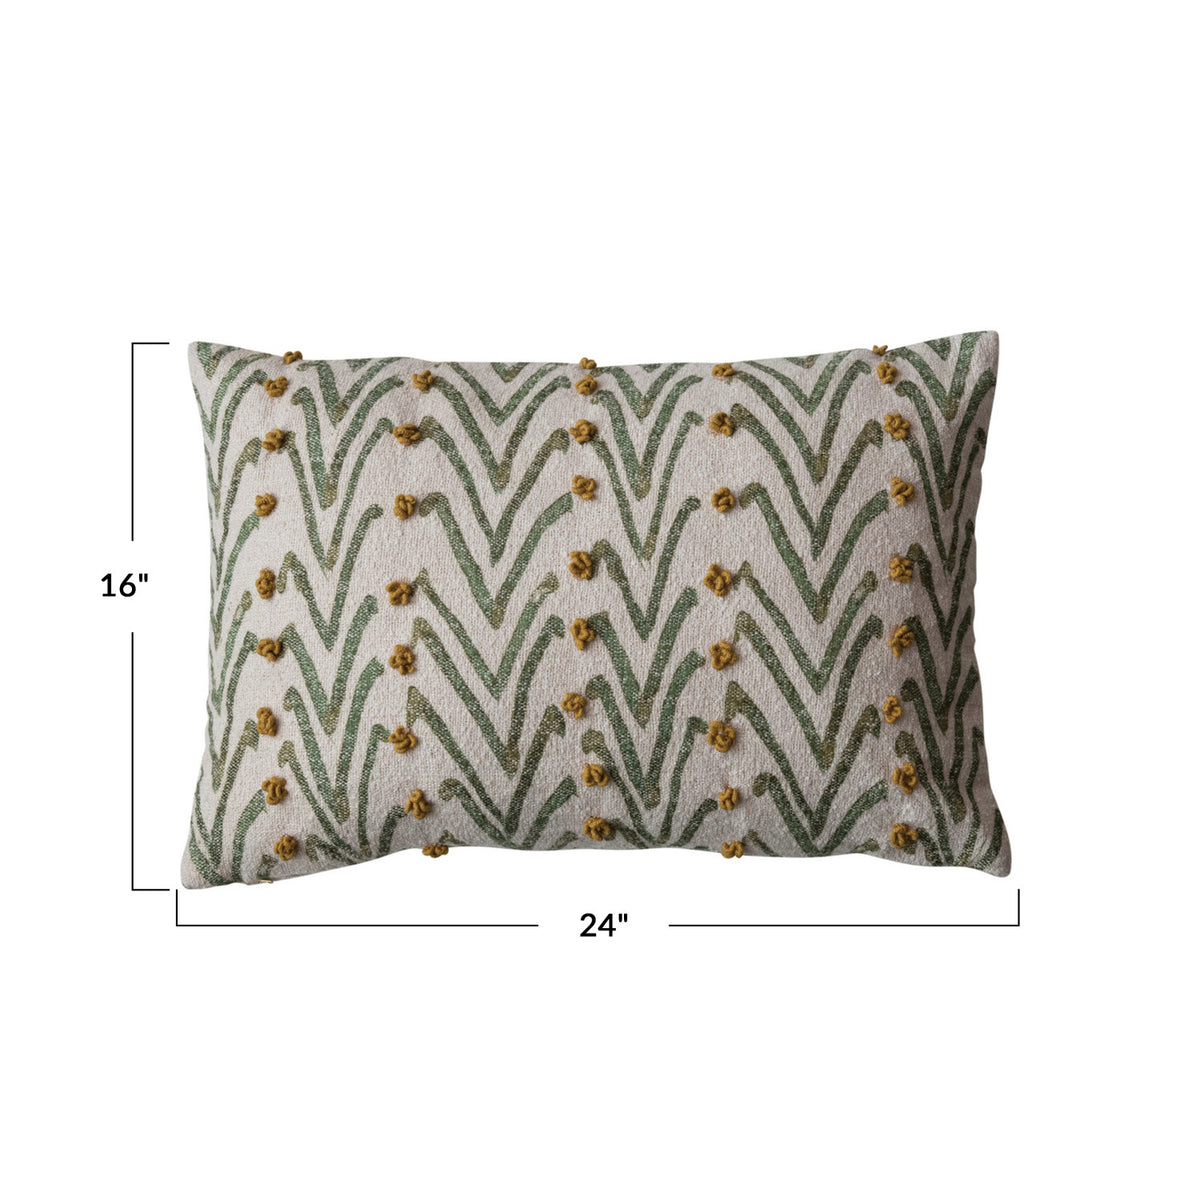 Woven Cotton Blend Printed Lumbar Pillow w/Abstract Pattern